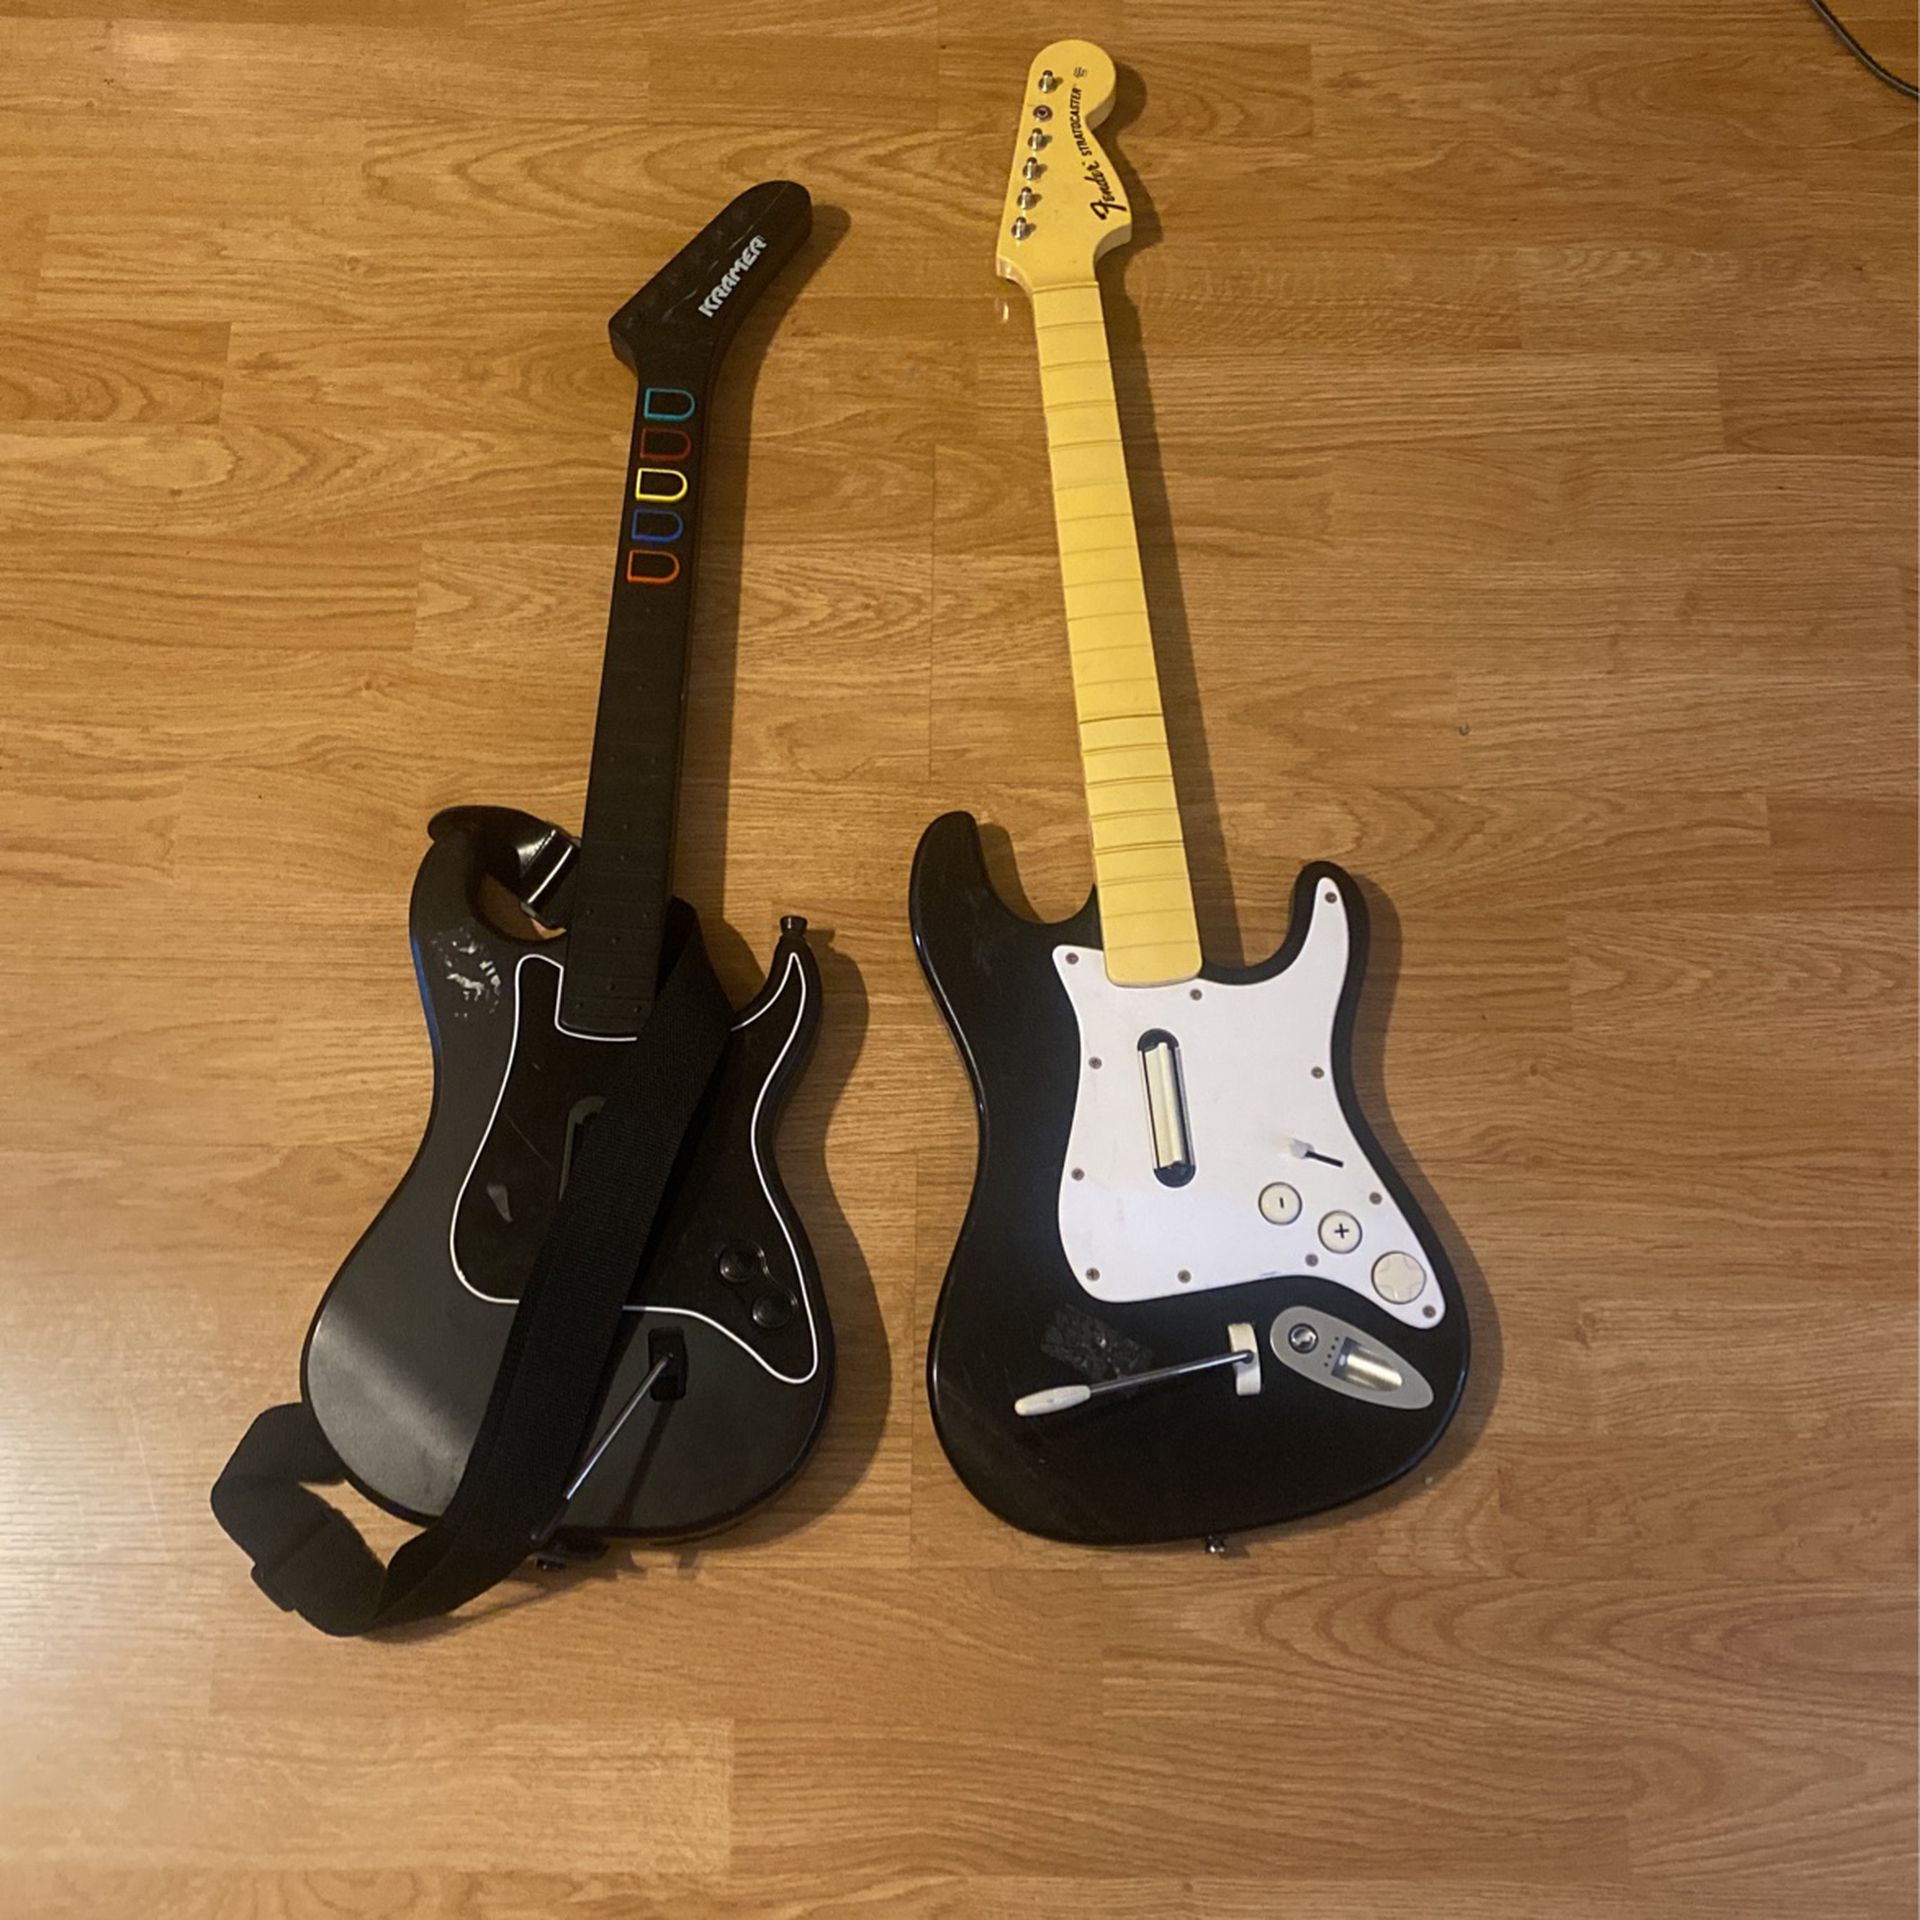 2 Guitars For Guitar Hero And Rockband 